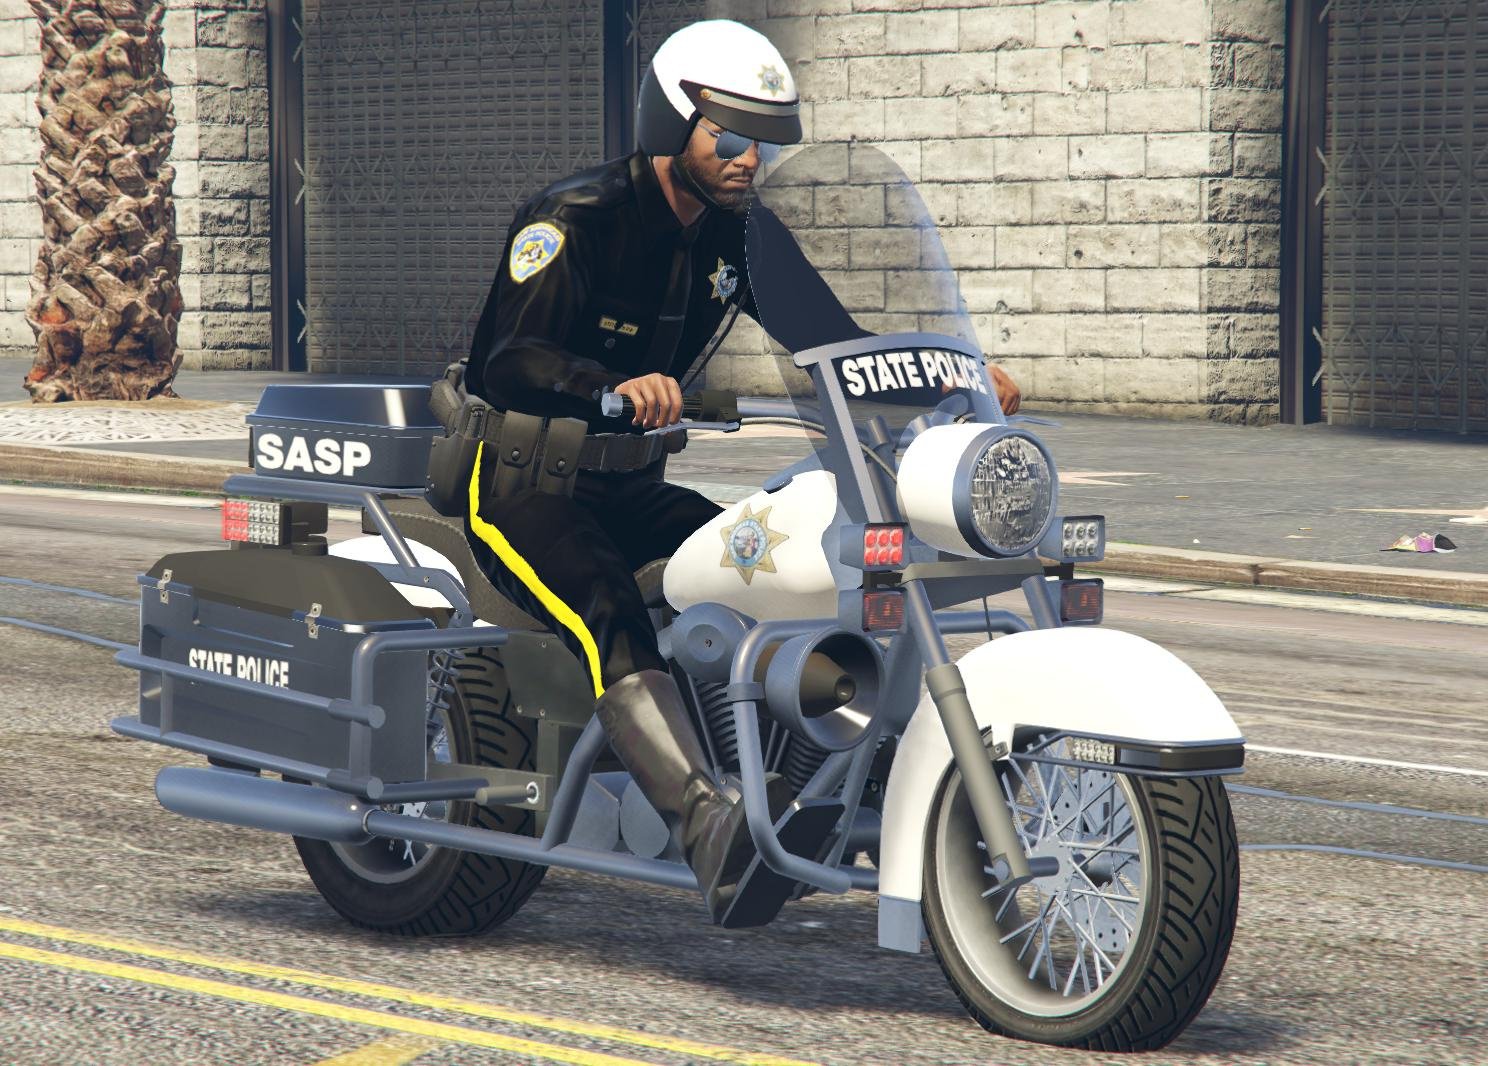 Gta 5 Police Motorcycle Location